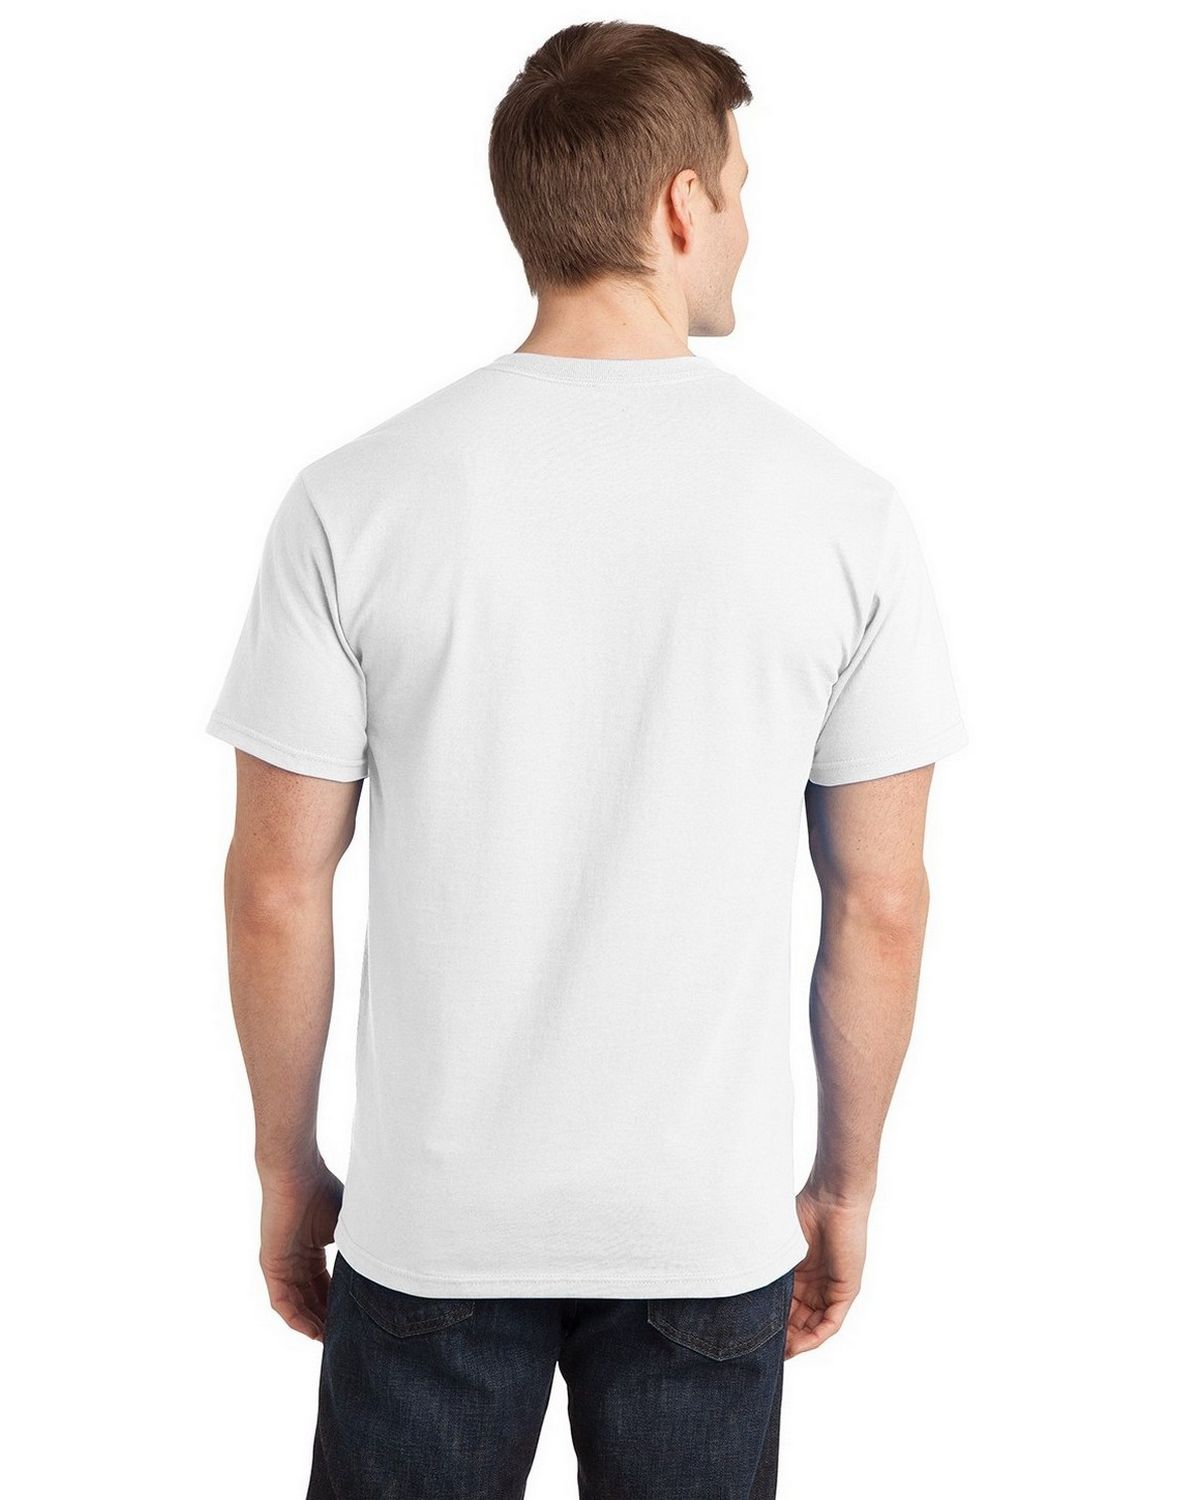 PC150 Mens Port & Company Essential Ring Spun Cotton T-Shirt 